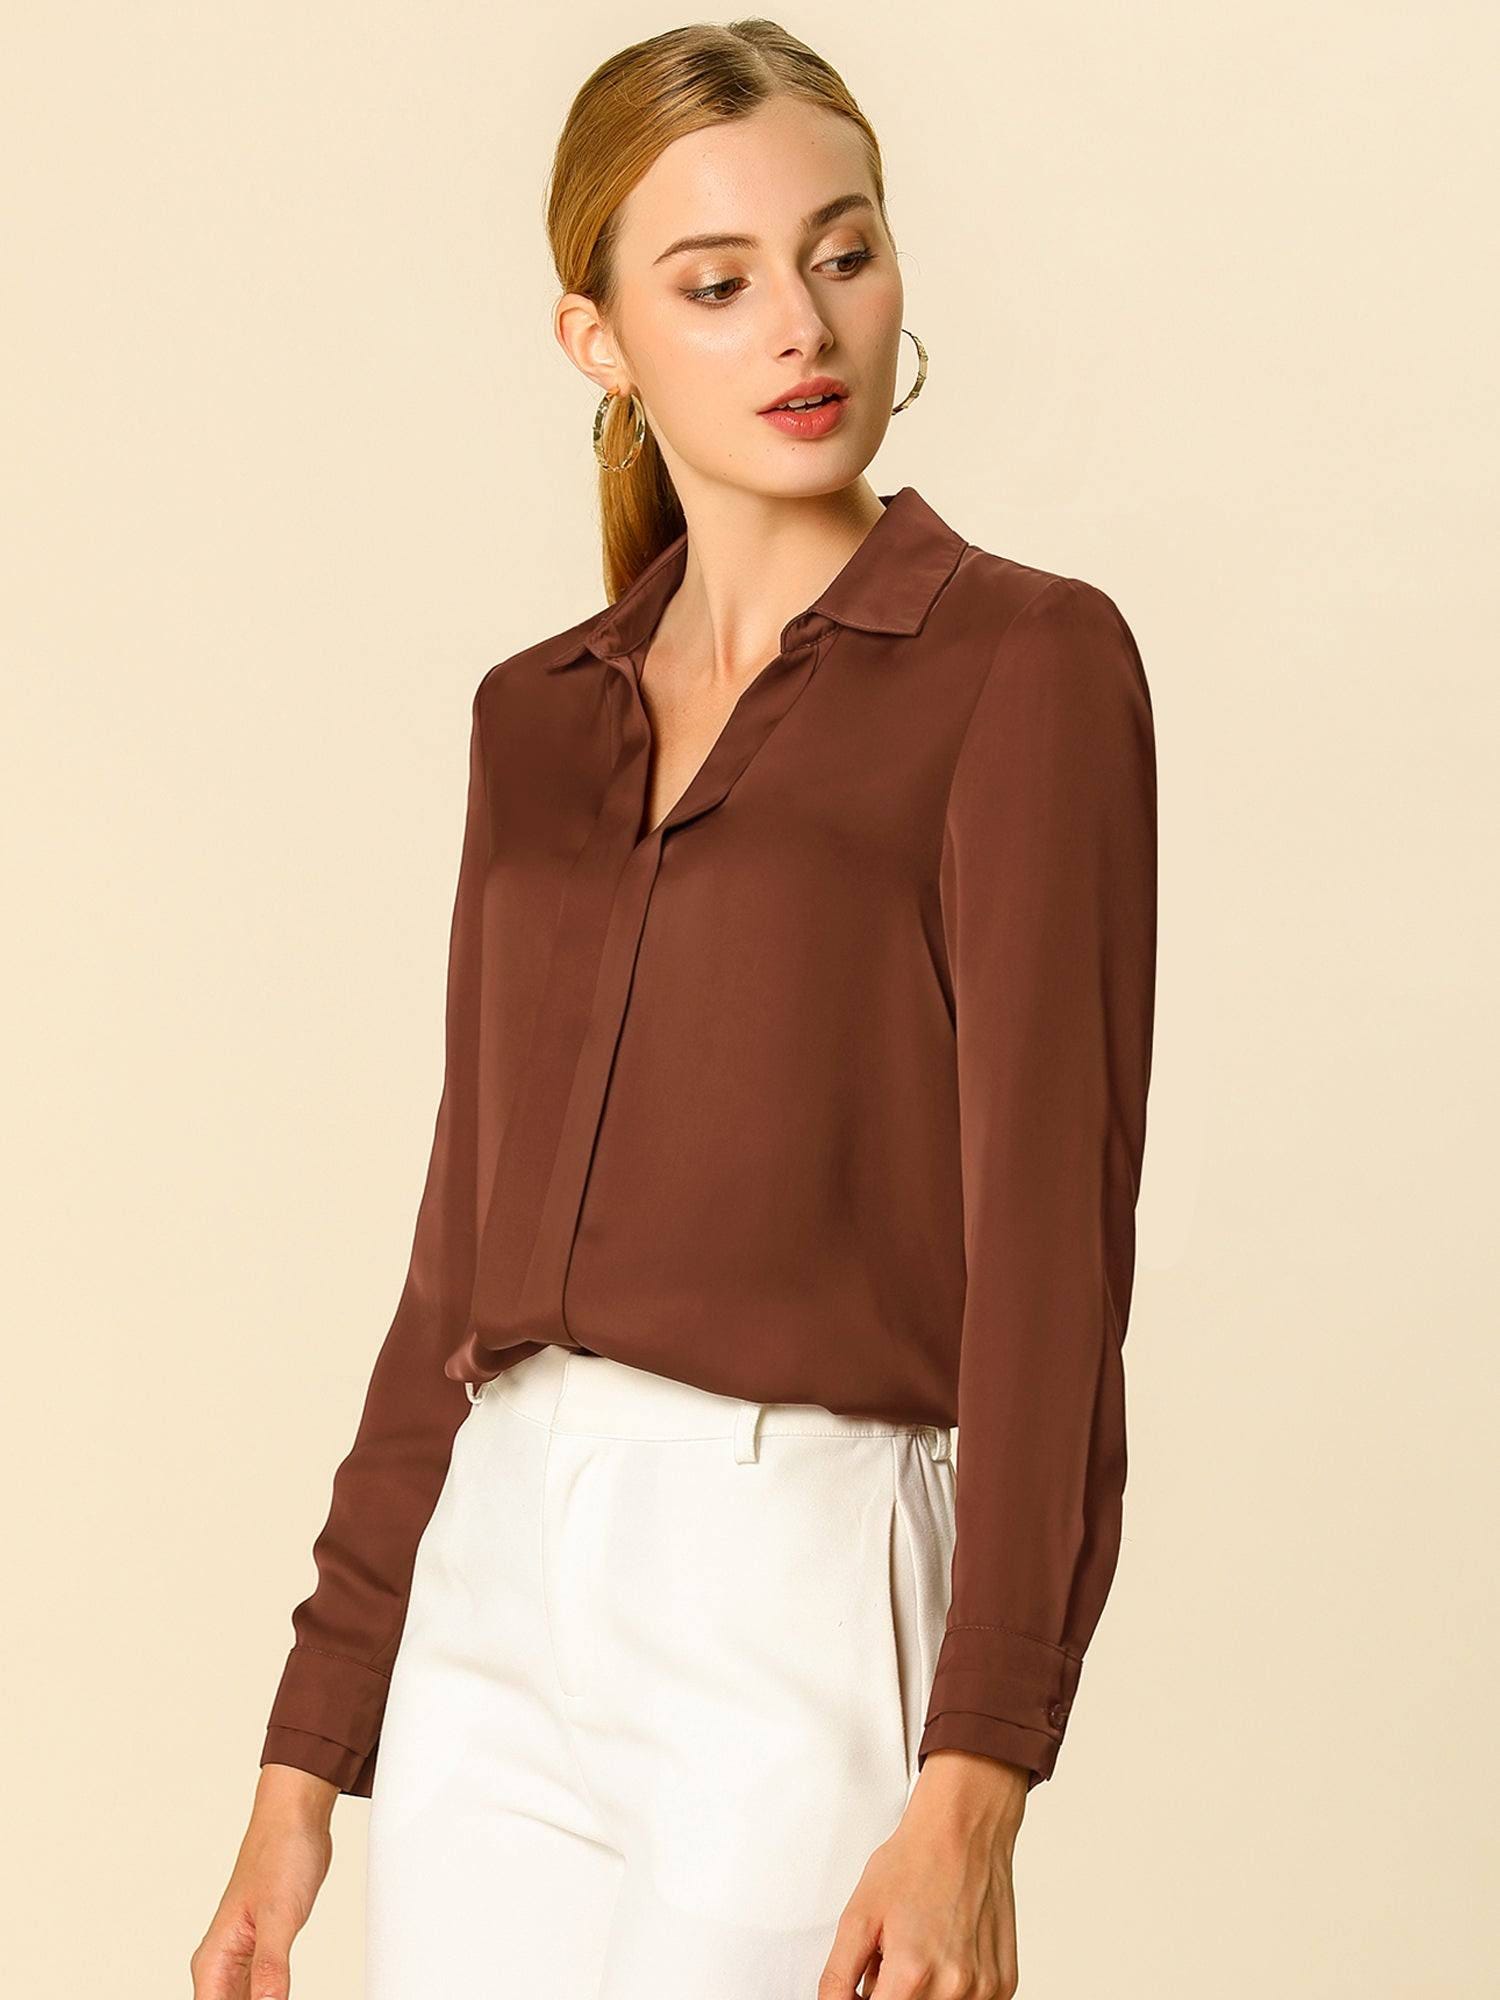 Elegant Brown V-Neck Long Sleeve Shirt for Work | Image